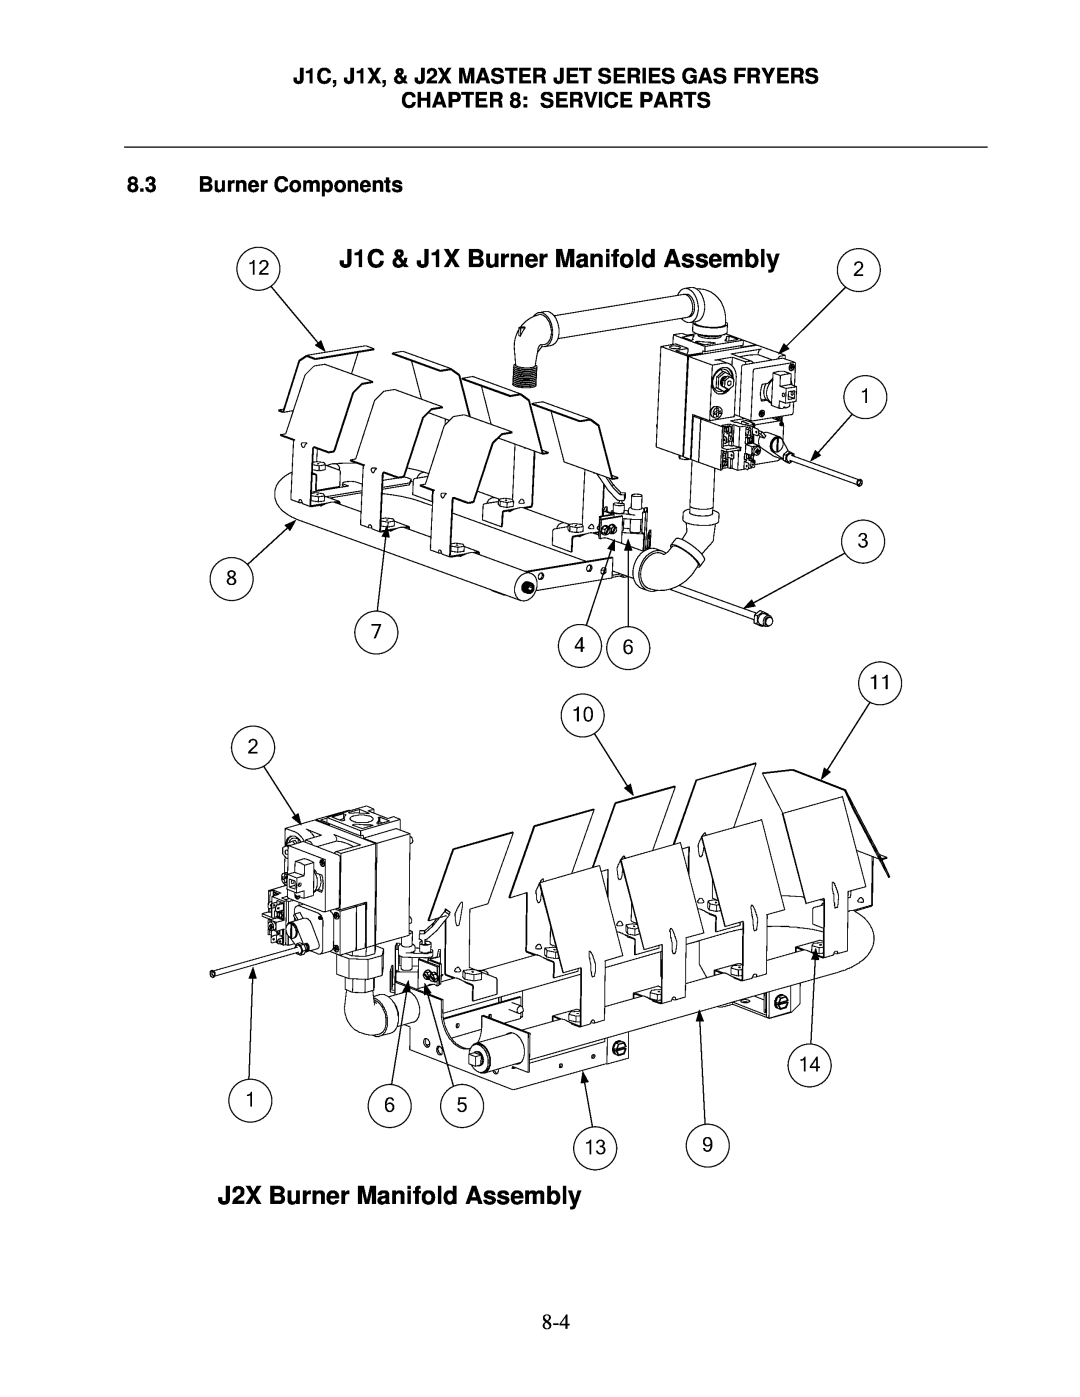 Frymaster manual J1C & J1X Burner Manifold Assembly J2X Burner Manifold Assembly, Burner Components 